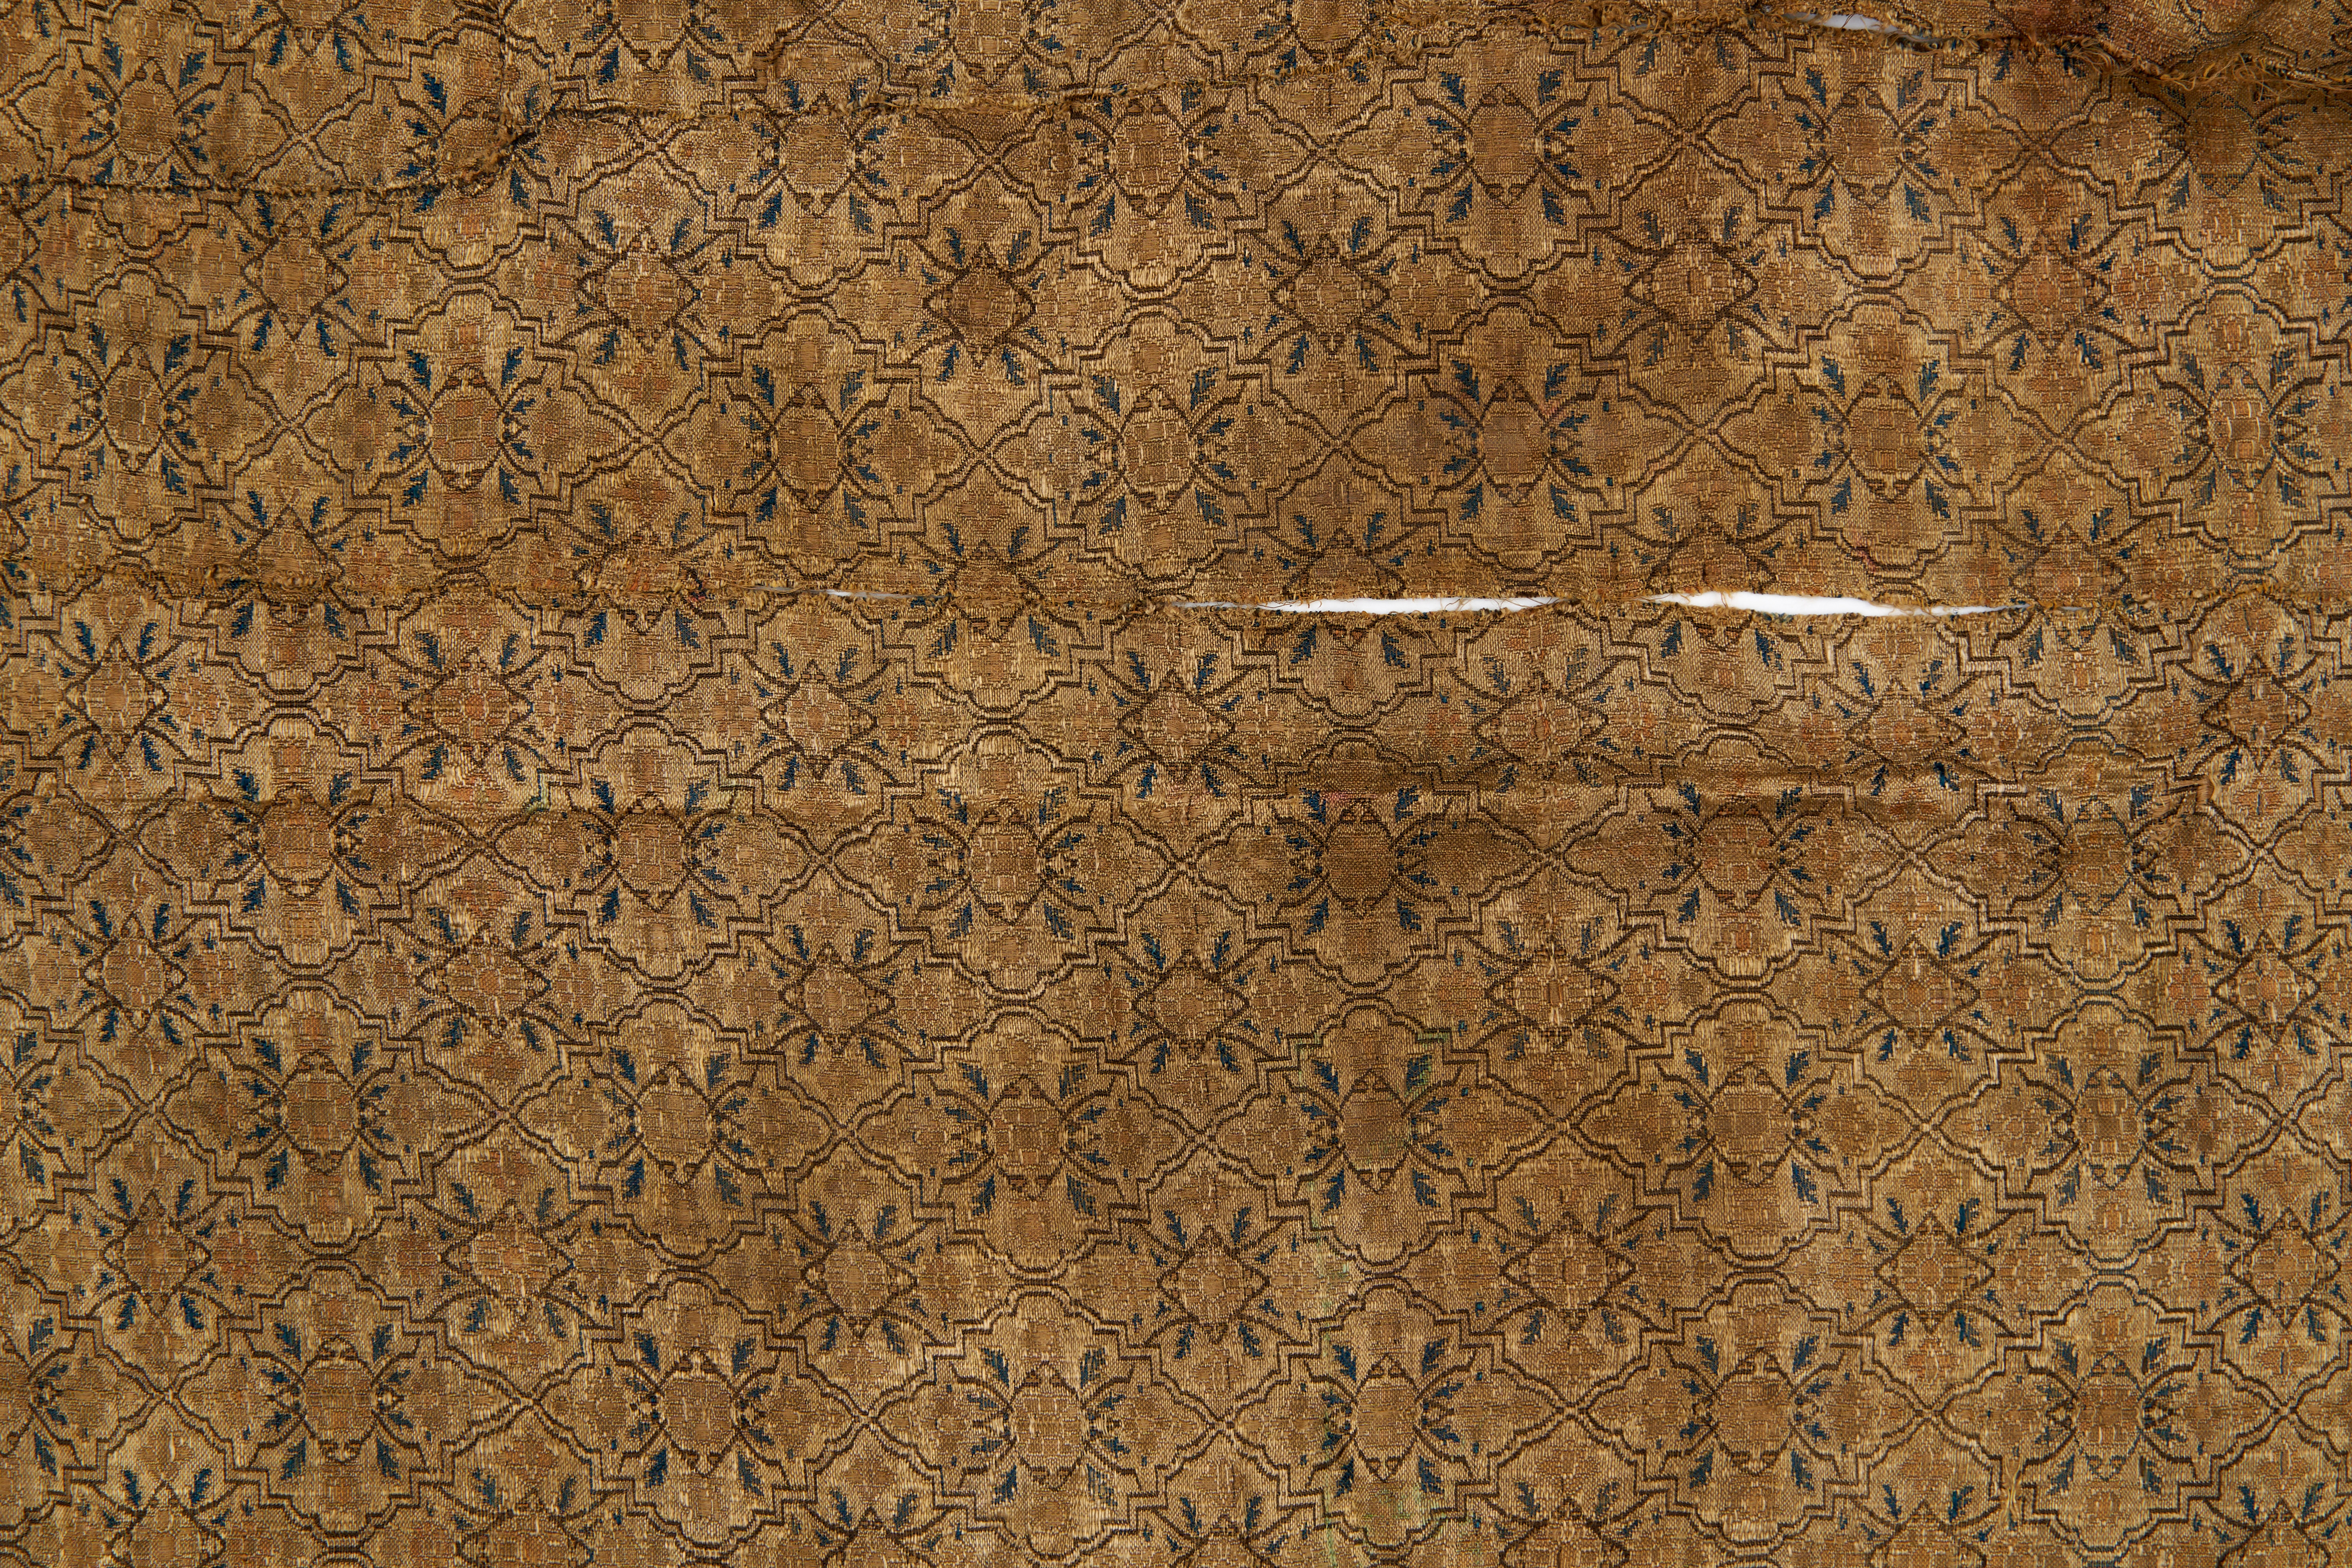 A SAFAVID SILK TEXTILE PANEL, 17TH CENTURY, PERSIA - Image 2 of 4